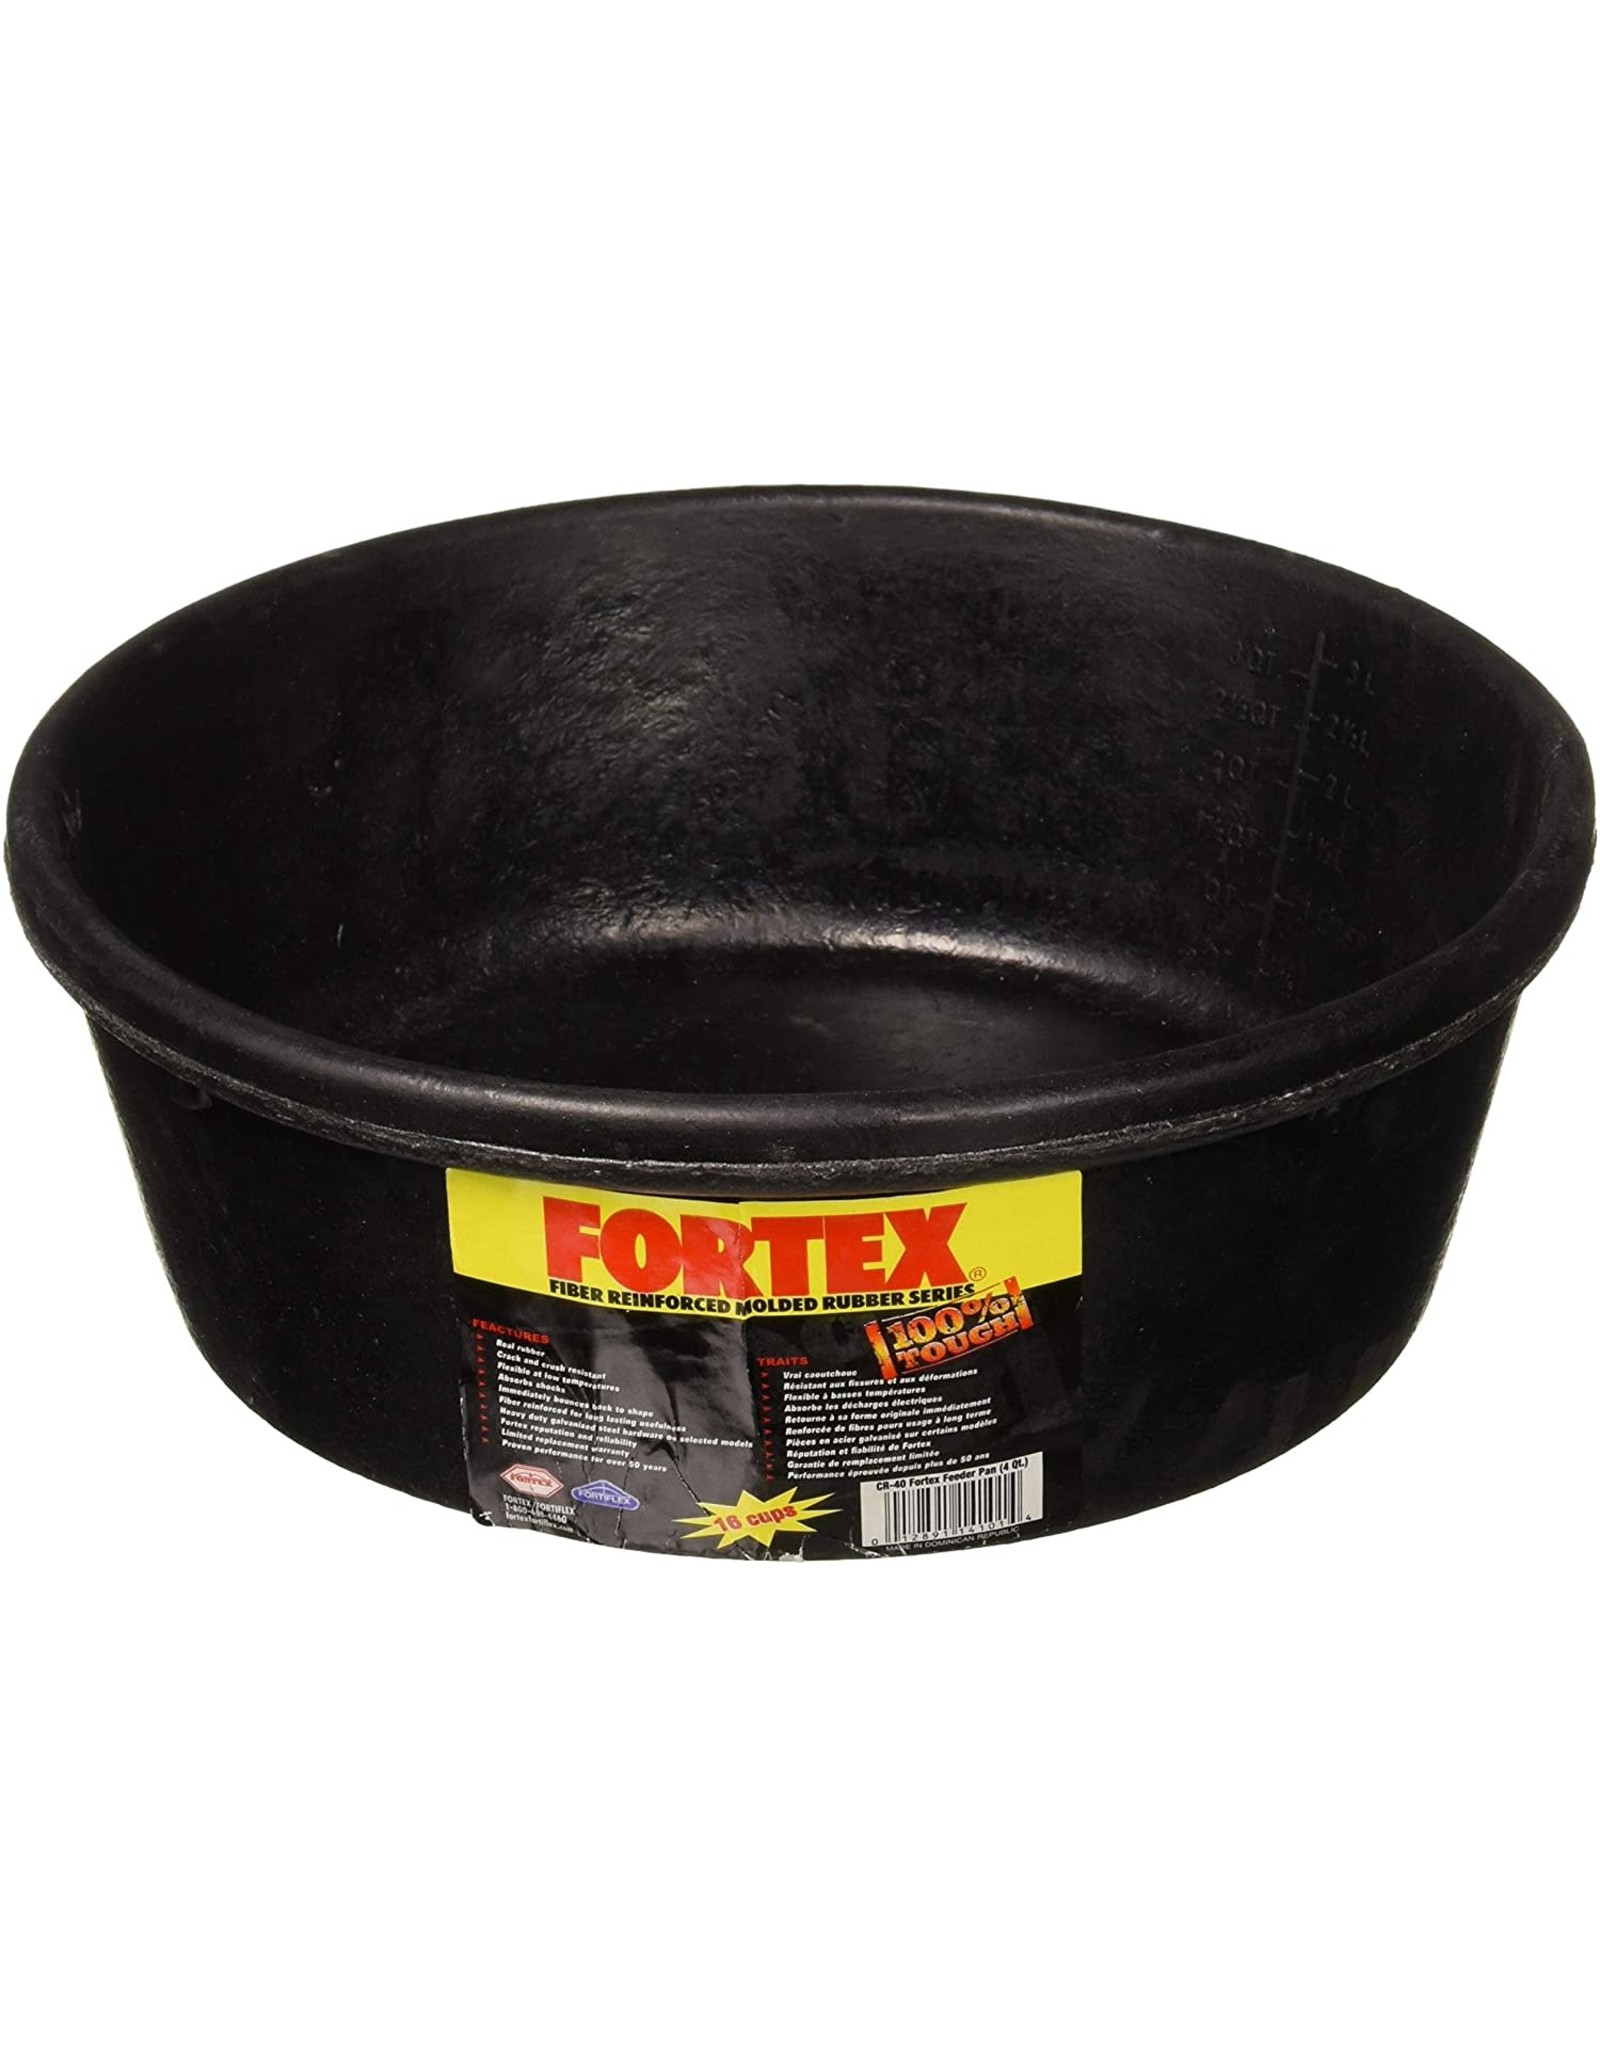 Fortex Black Rubber Pan Feeder 4 qt